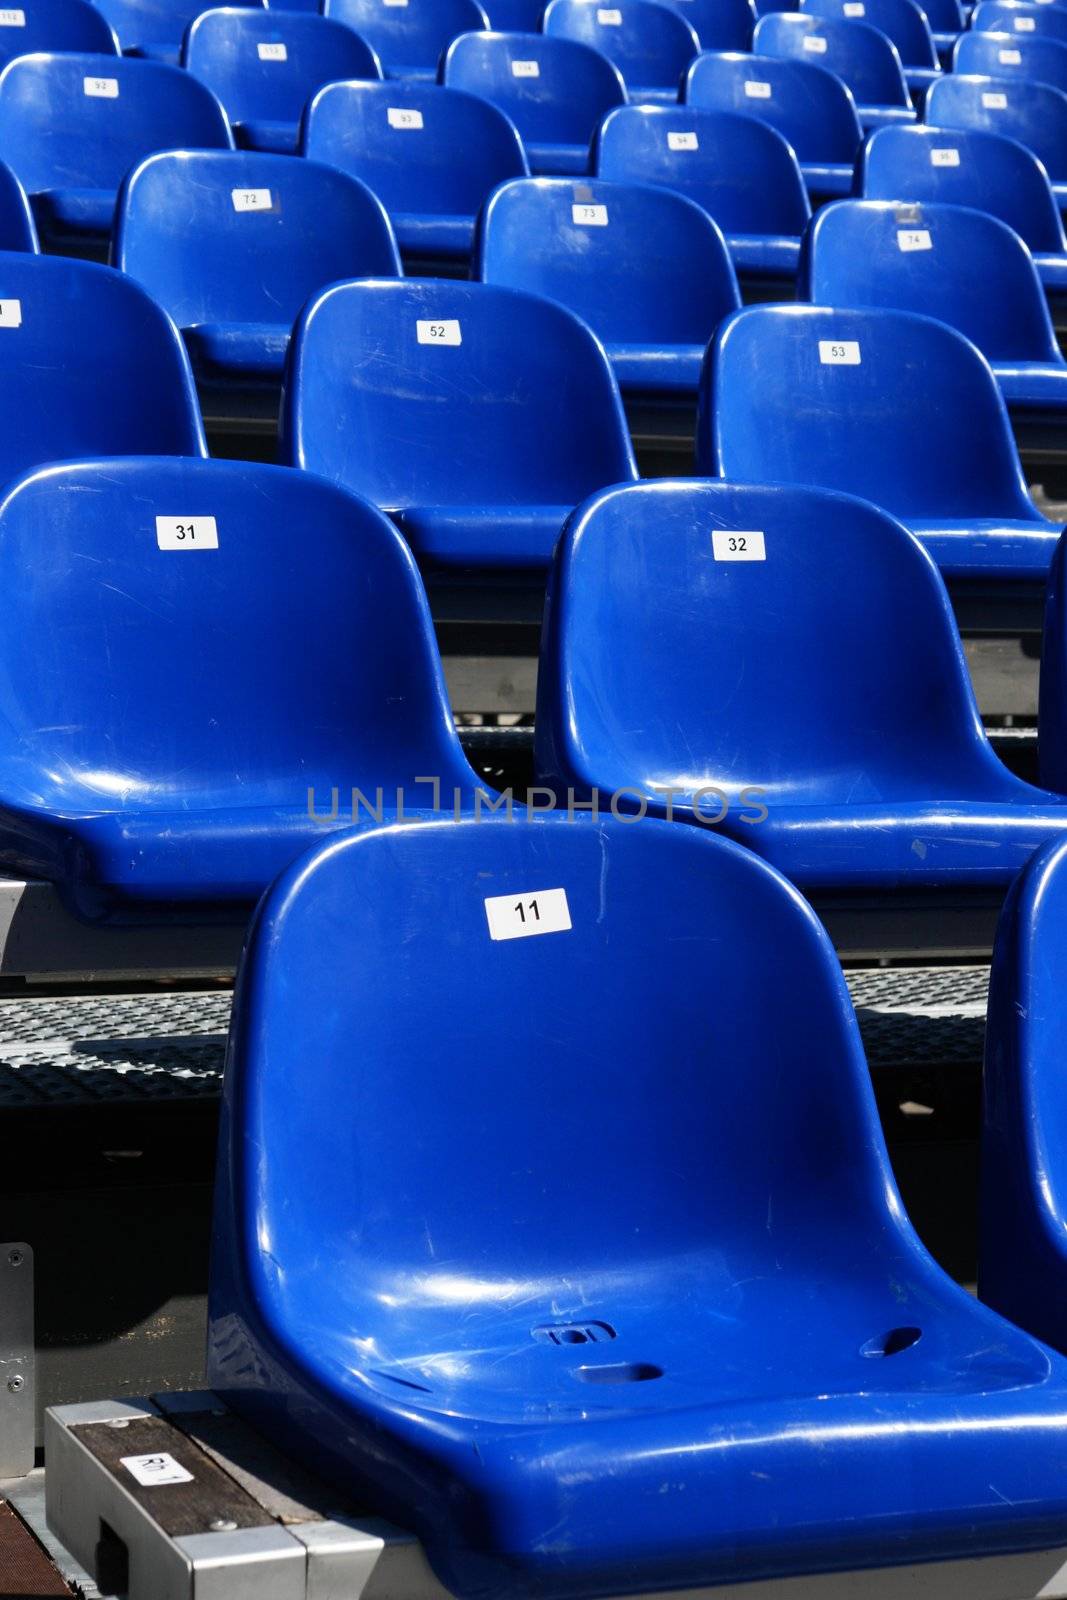 Blue Seats On Stadium by yucas